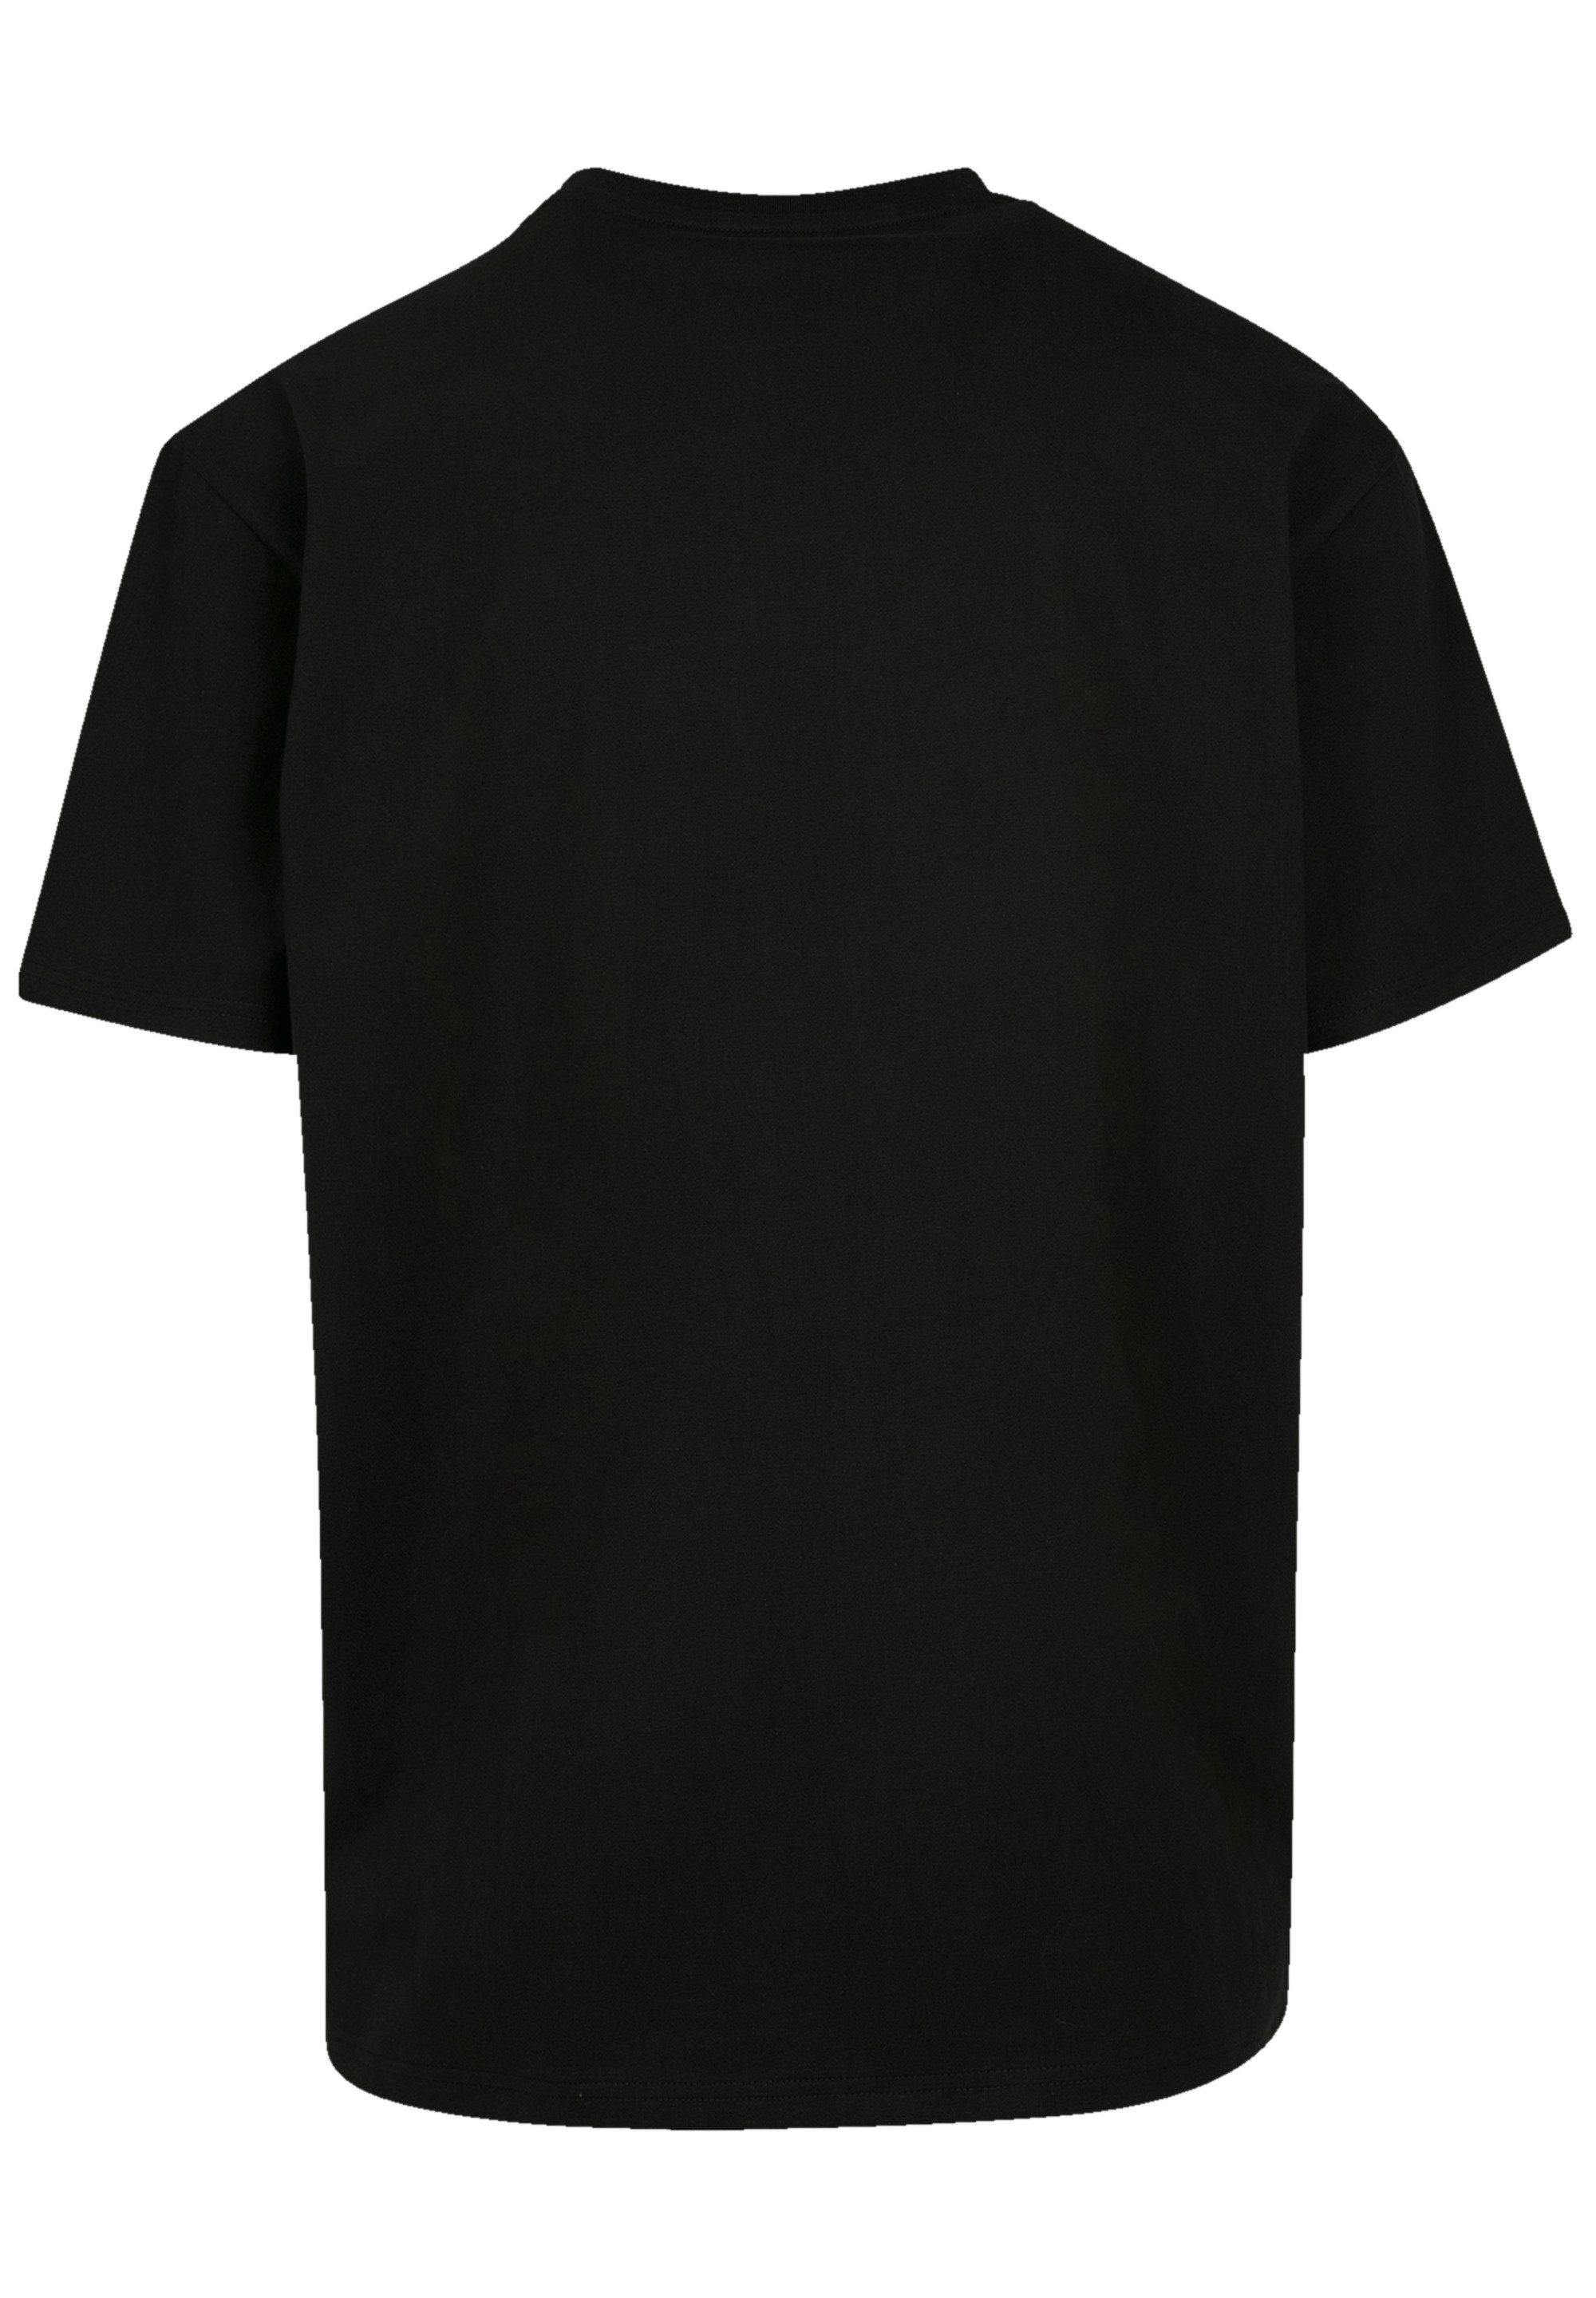 F4NT4STIC T-Shirt Sansta Paws Christmas Qualität, Band Cat Breast schwarz Rock-Musik, Premium